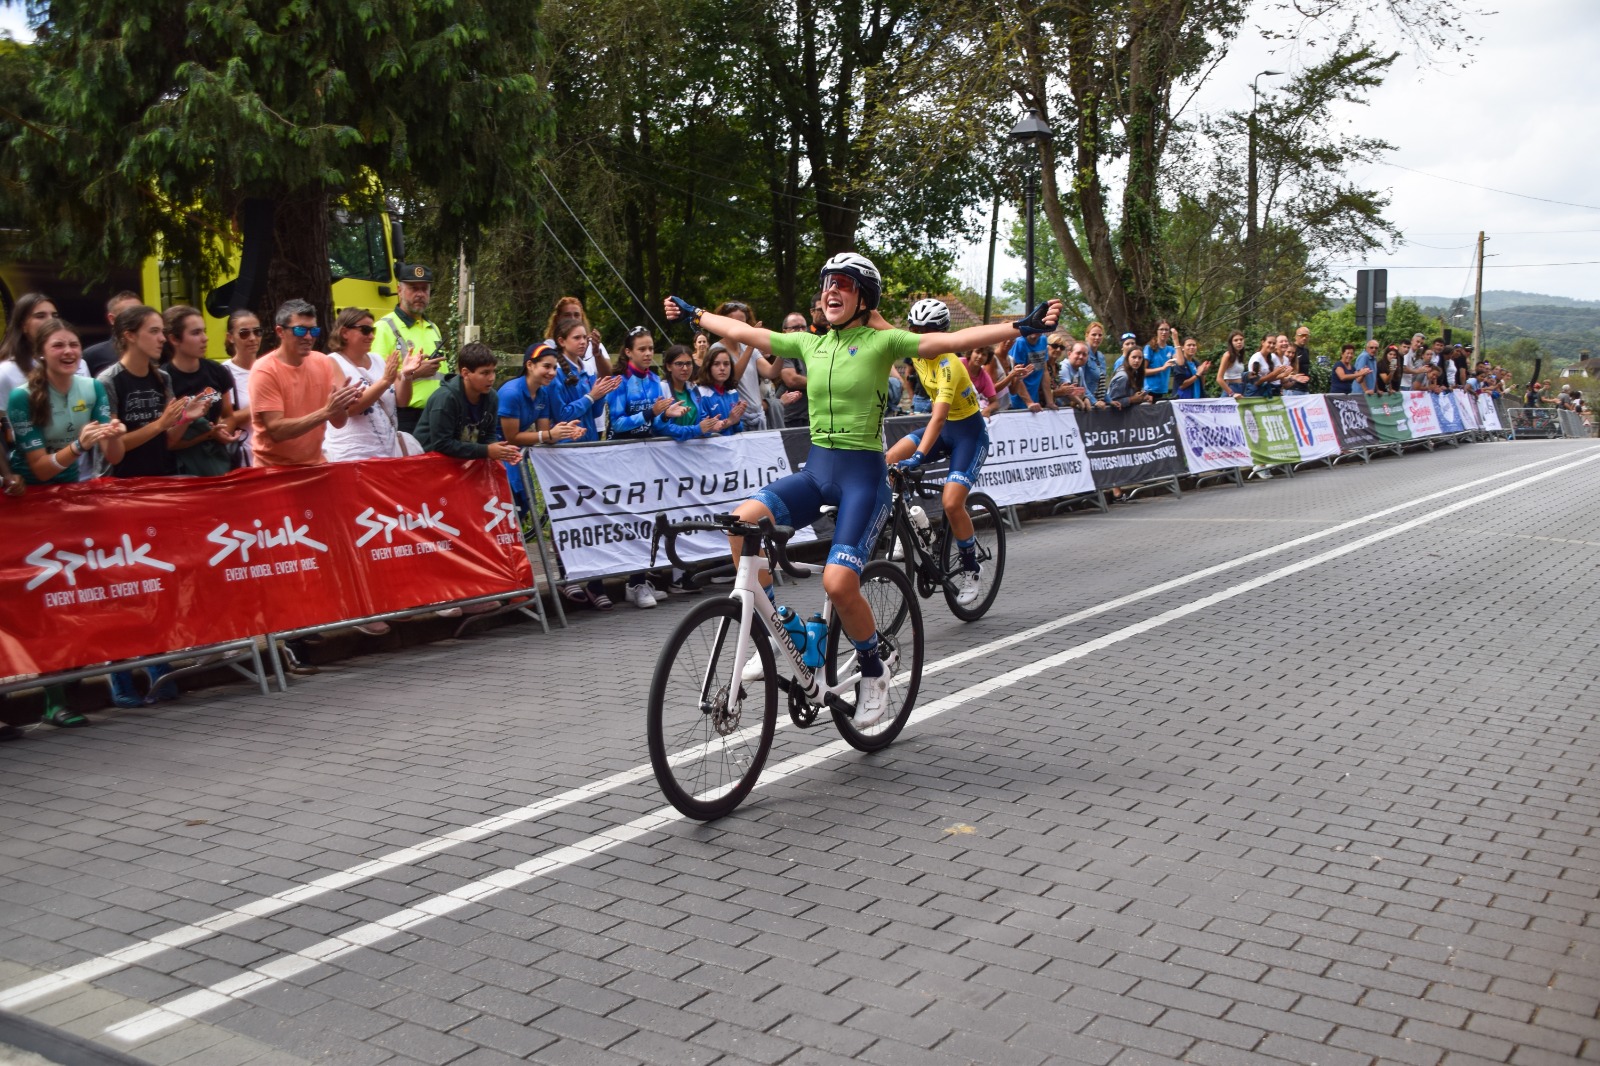 Magdalena Deya y Paula Ostiz ganan la Vuelta a Cantabria Femenina